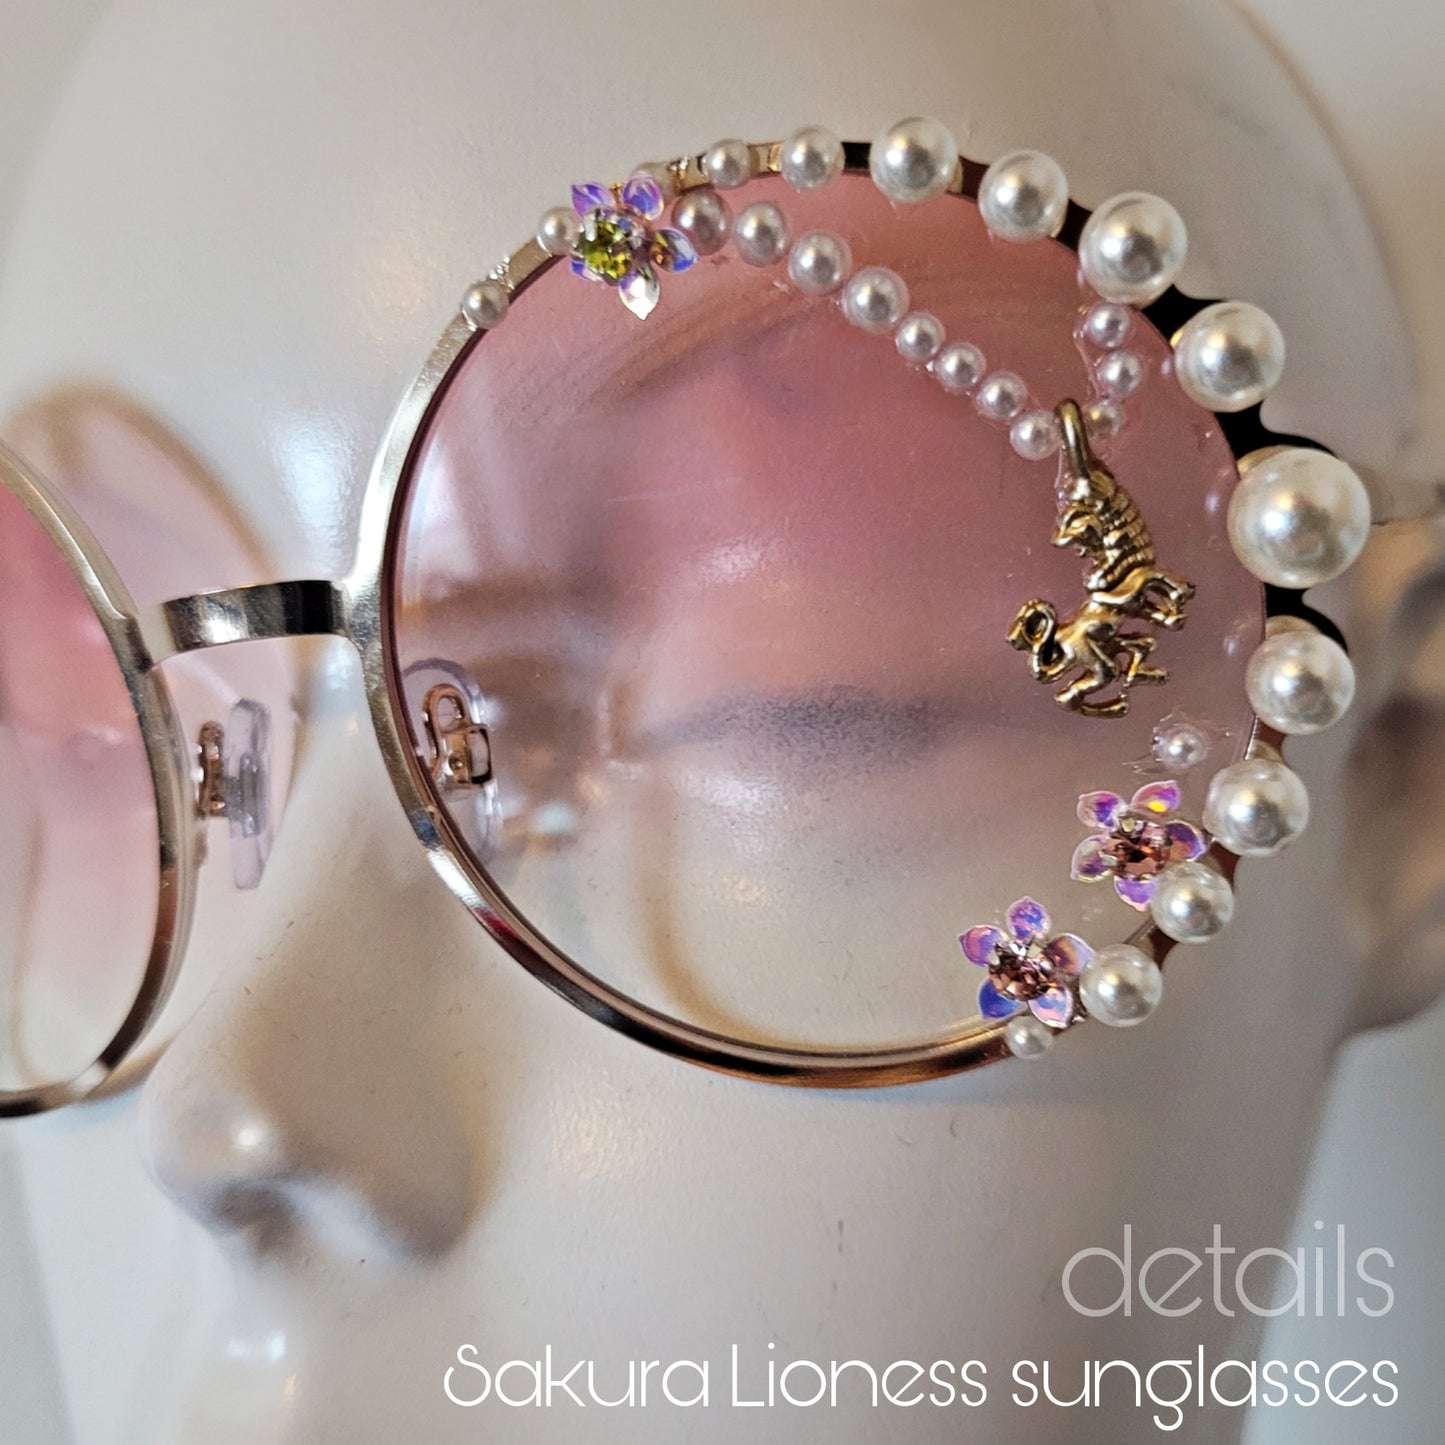 Flower & Pearls collection: Sakura edition, The Sakura Lioness Sunglasses